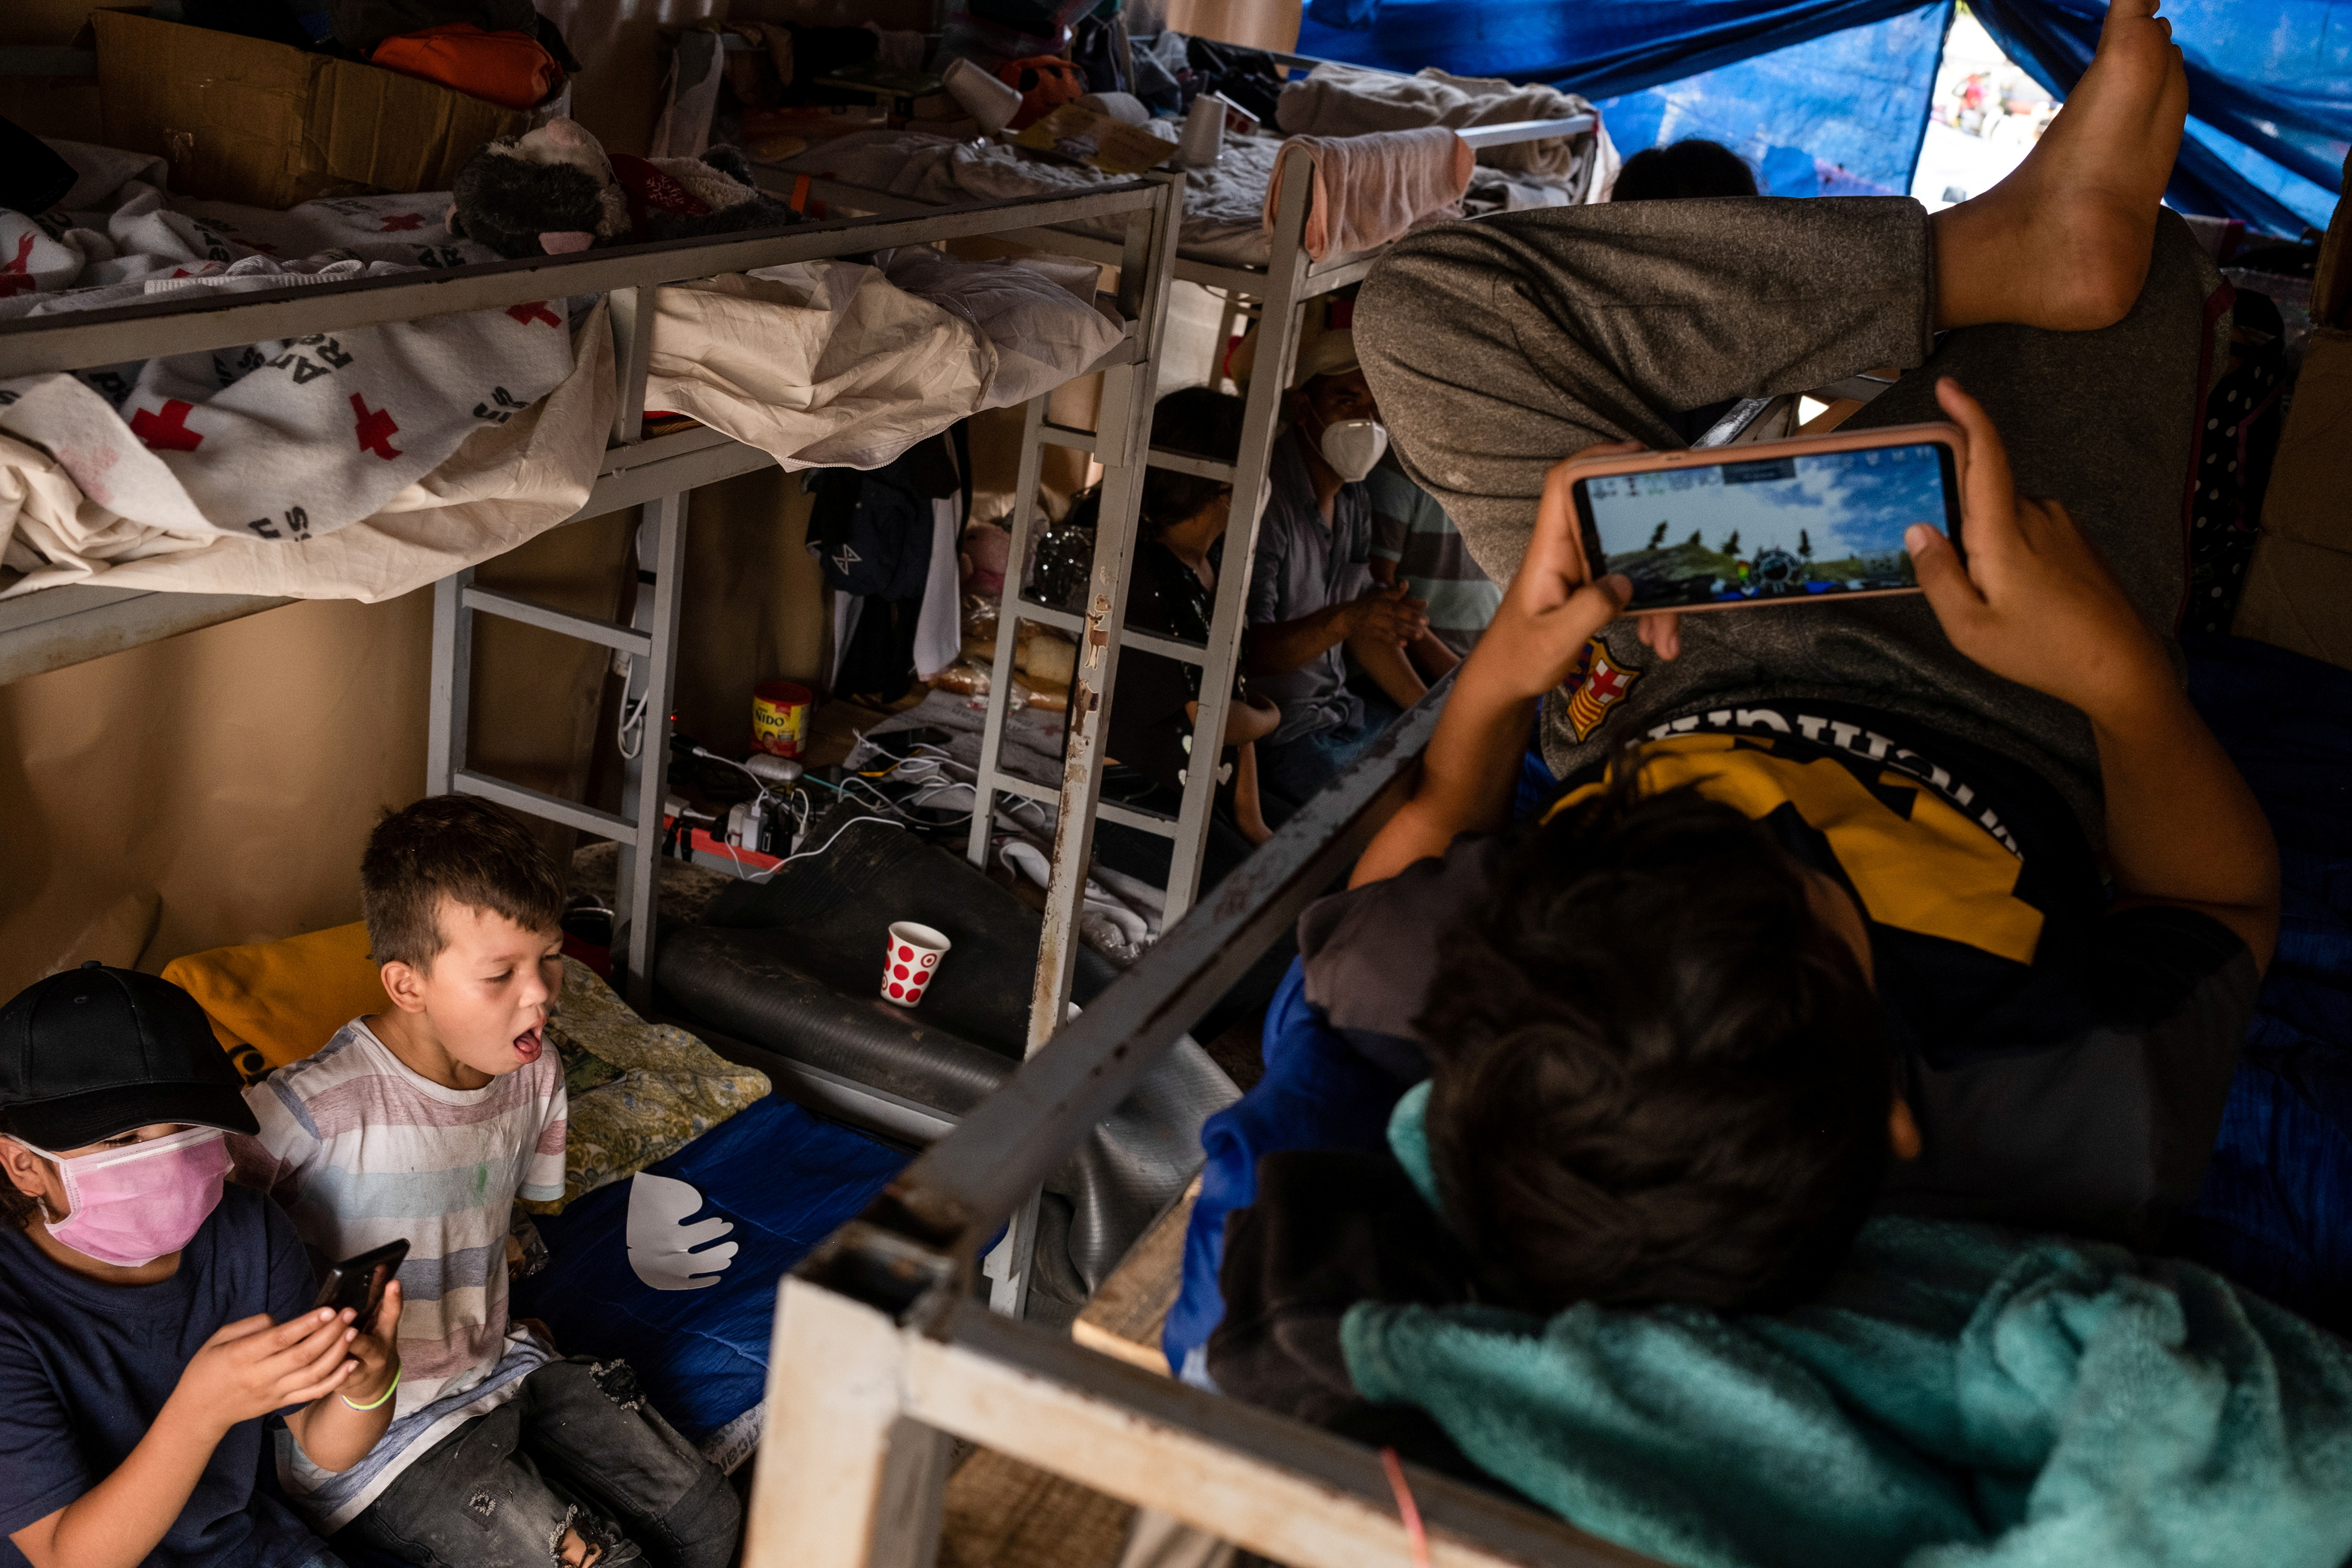 Asylum-seeking migrants live in a public square in Reynosa, Mexico